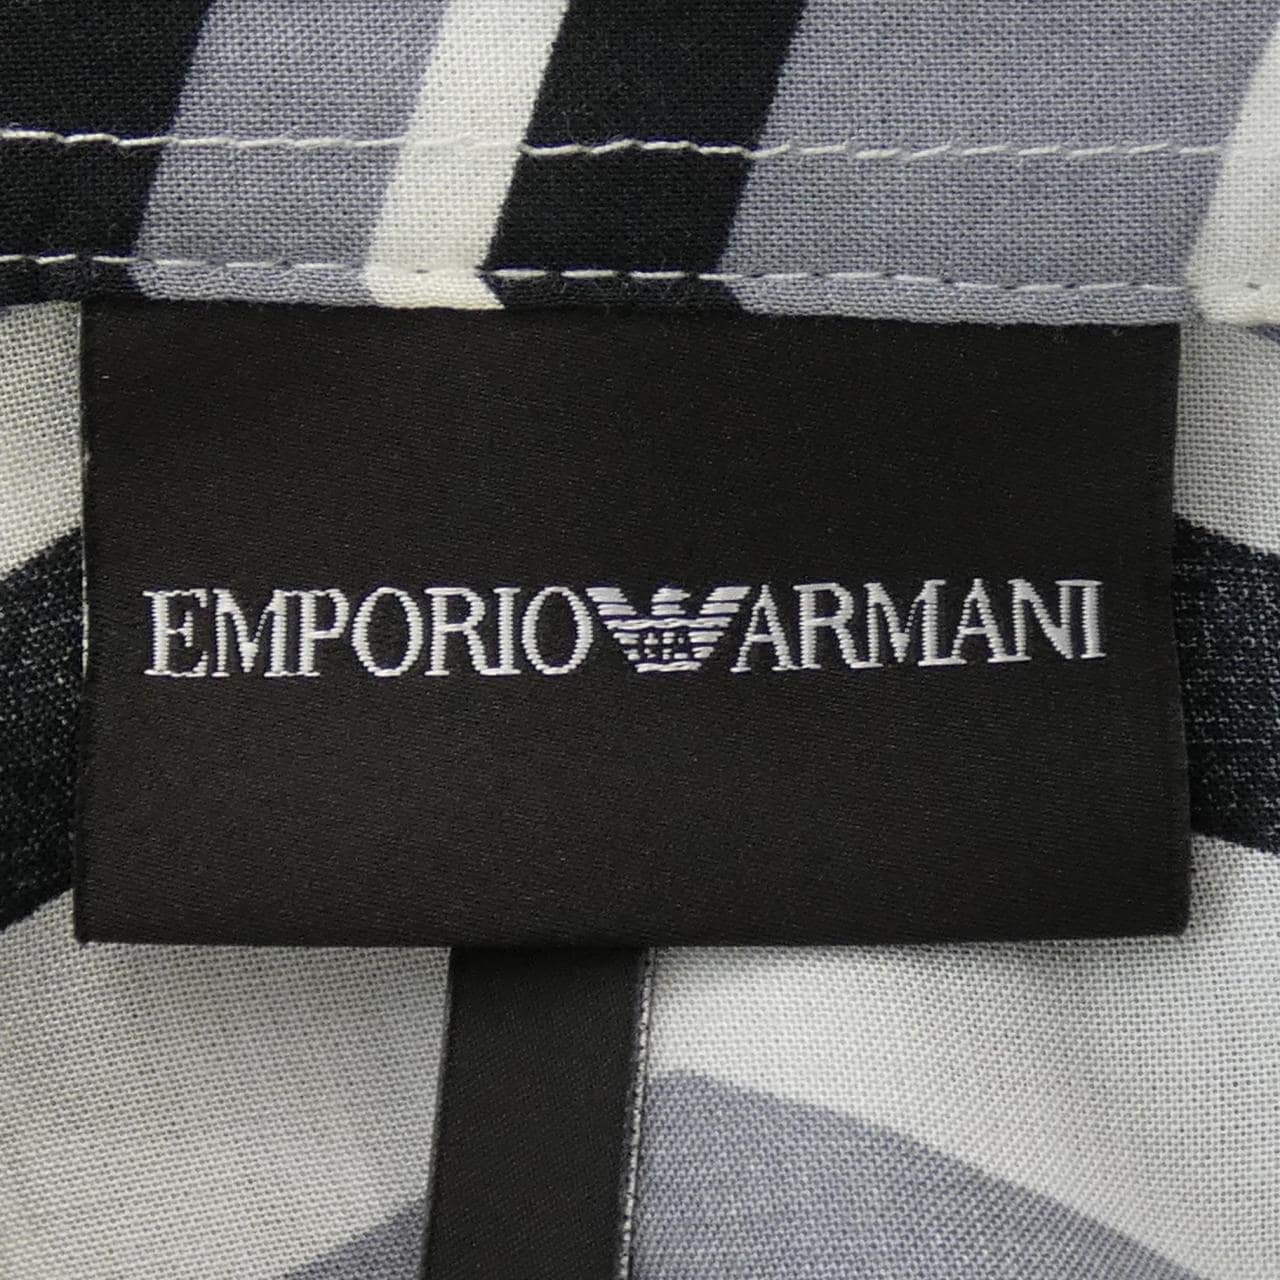 EMPORIO ARMANI EMPORIO ARMANI SHIRT